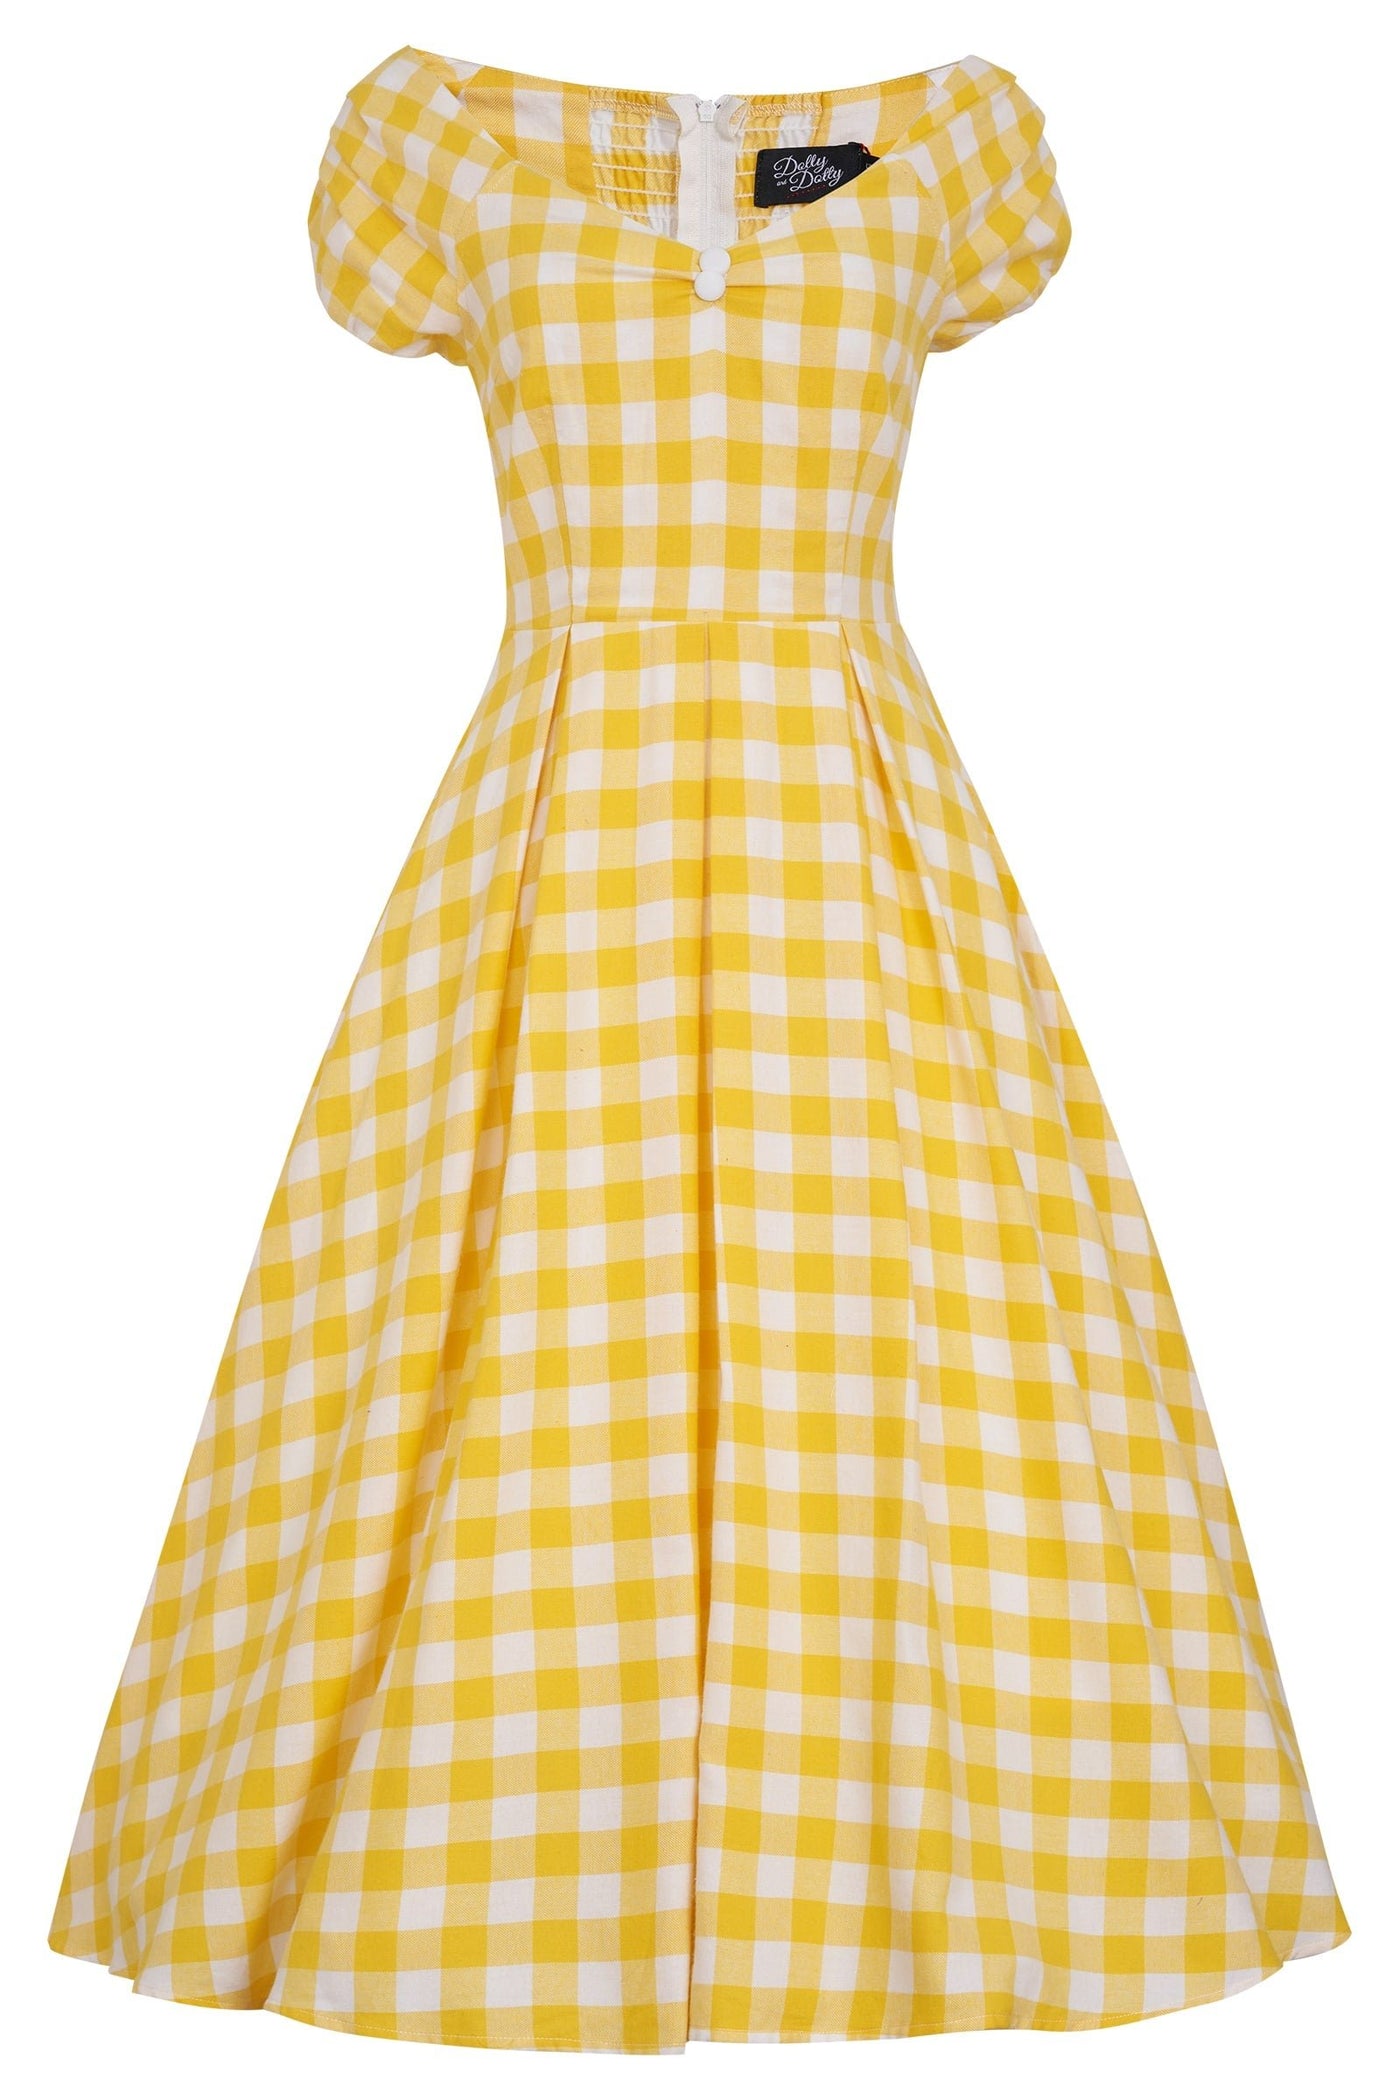 Off Shoulder Yellow Gingham Dress